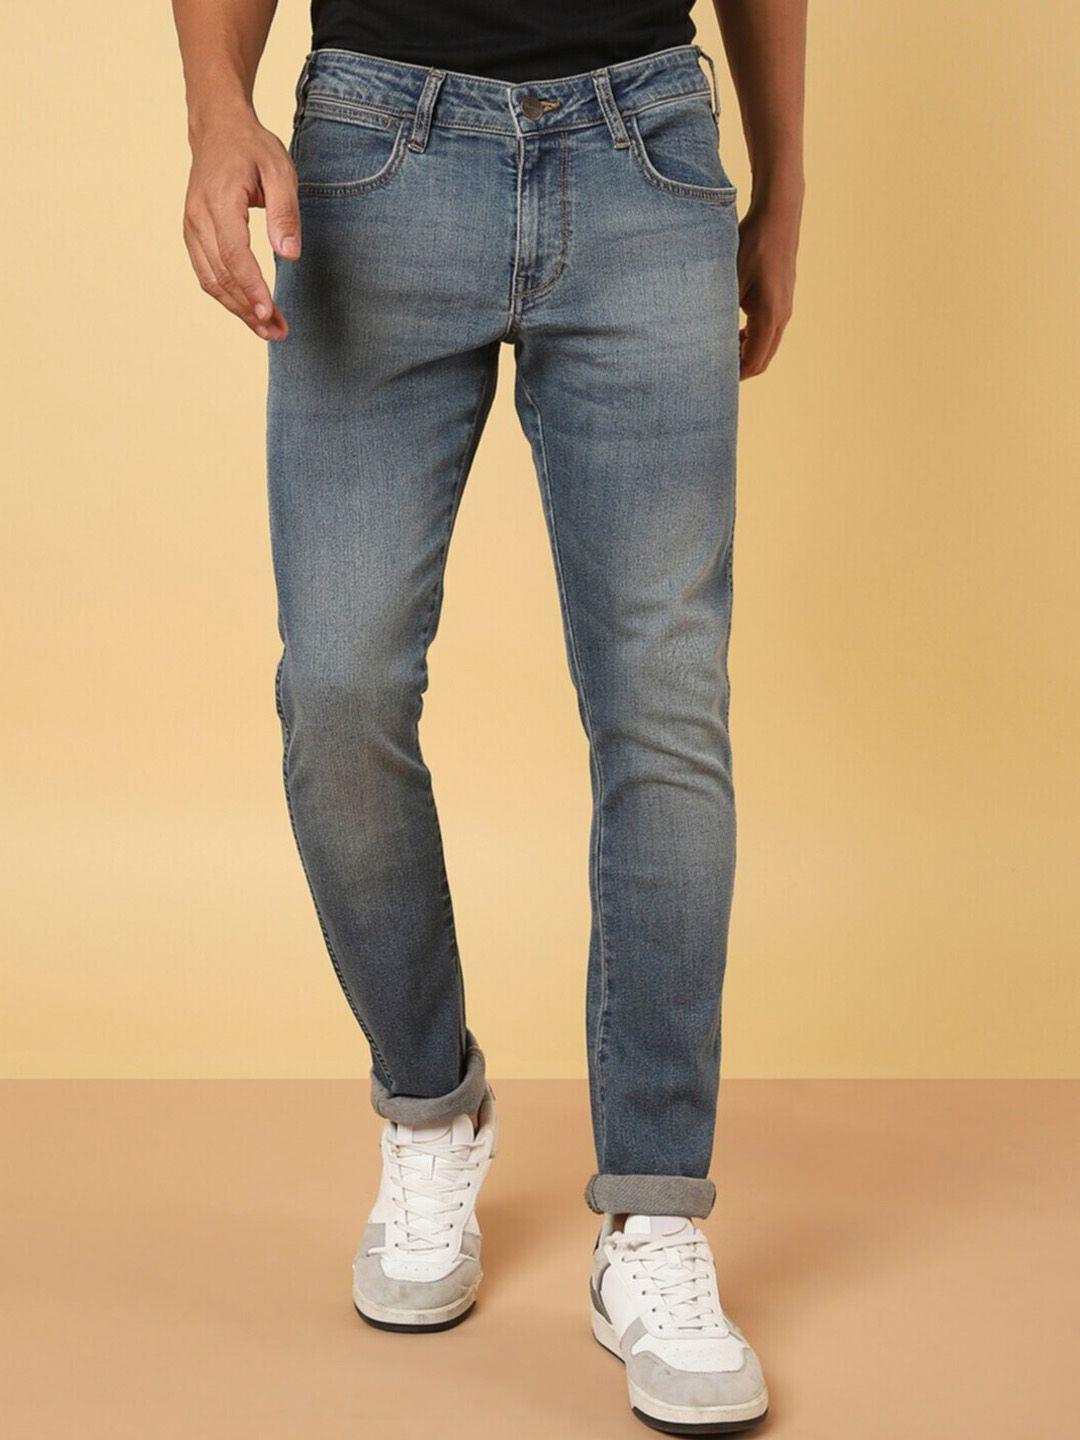 wrangler-men-skinny-fit-vegas-low-rise-light-fade-stretchable-jeans